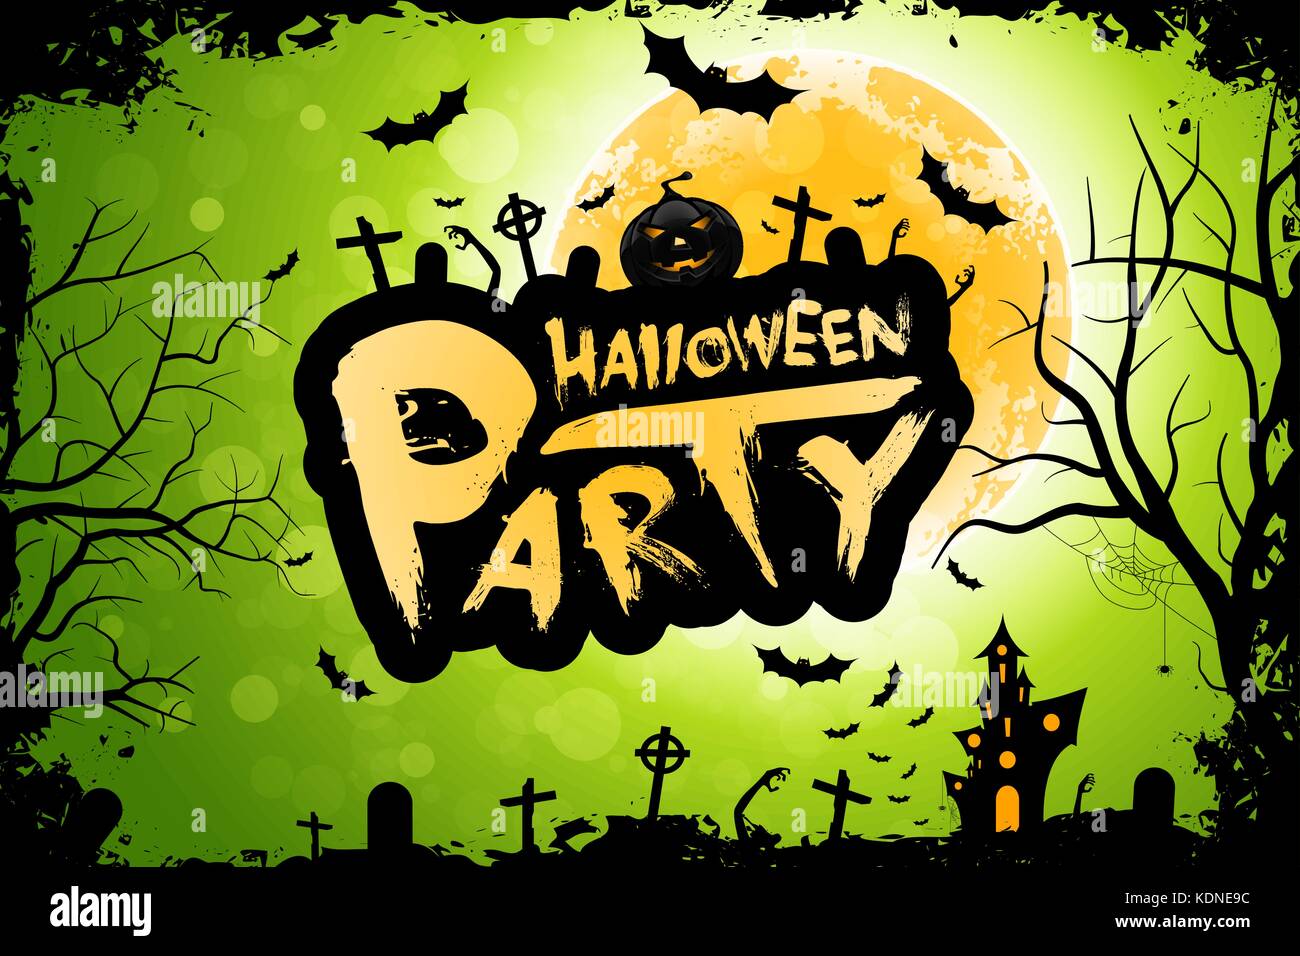 Halloween Party Background Stock Vector